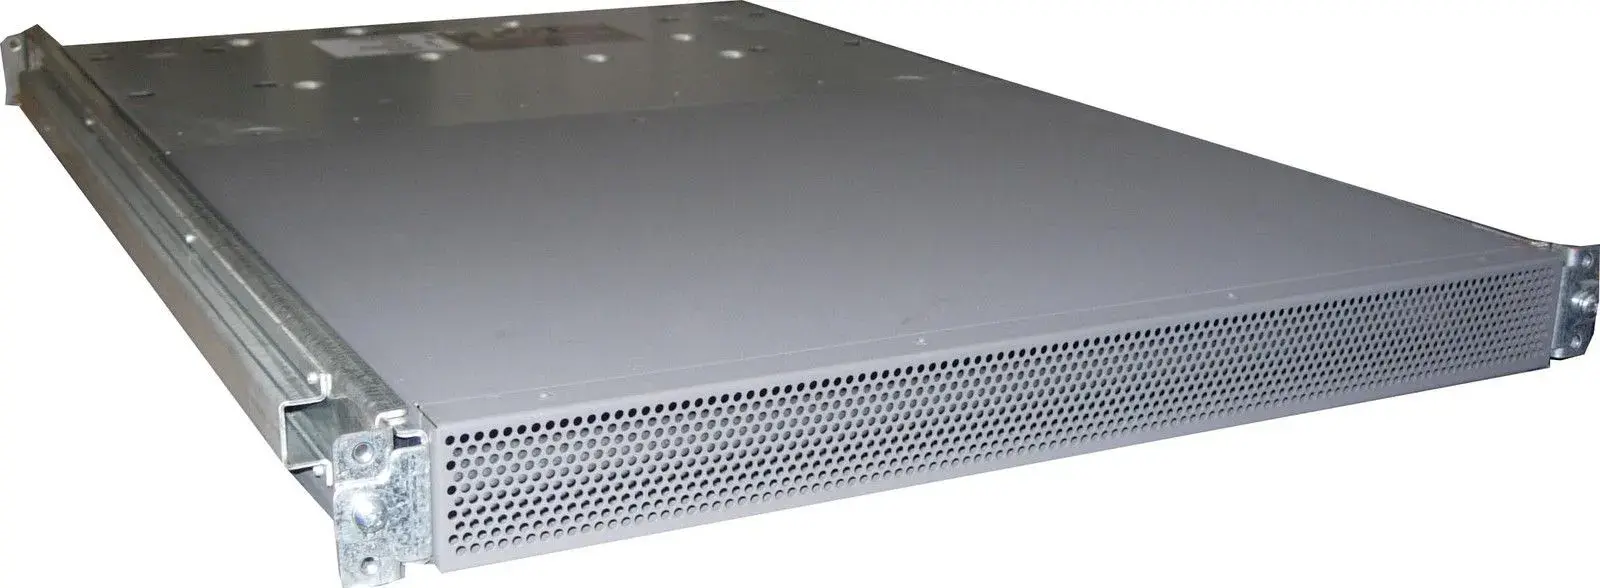 AA978A HP StorageWorks 16-Port 1U Fibre Channel Rackmountable SAN Switch